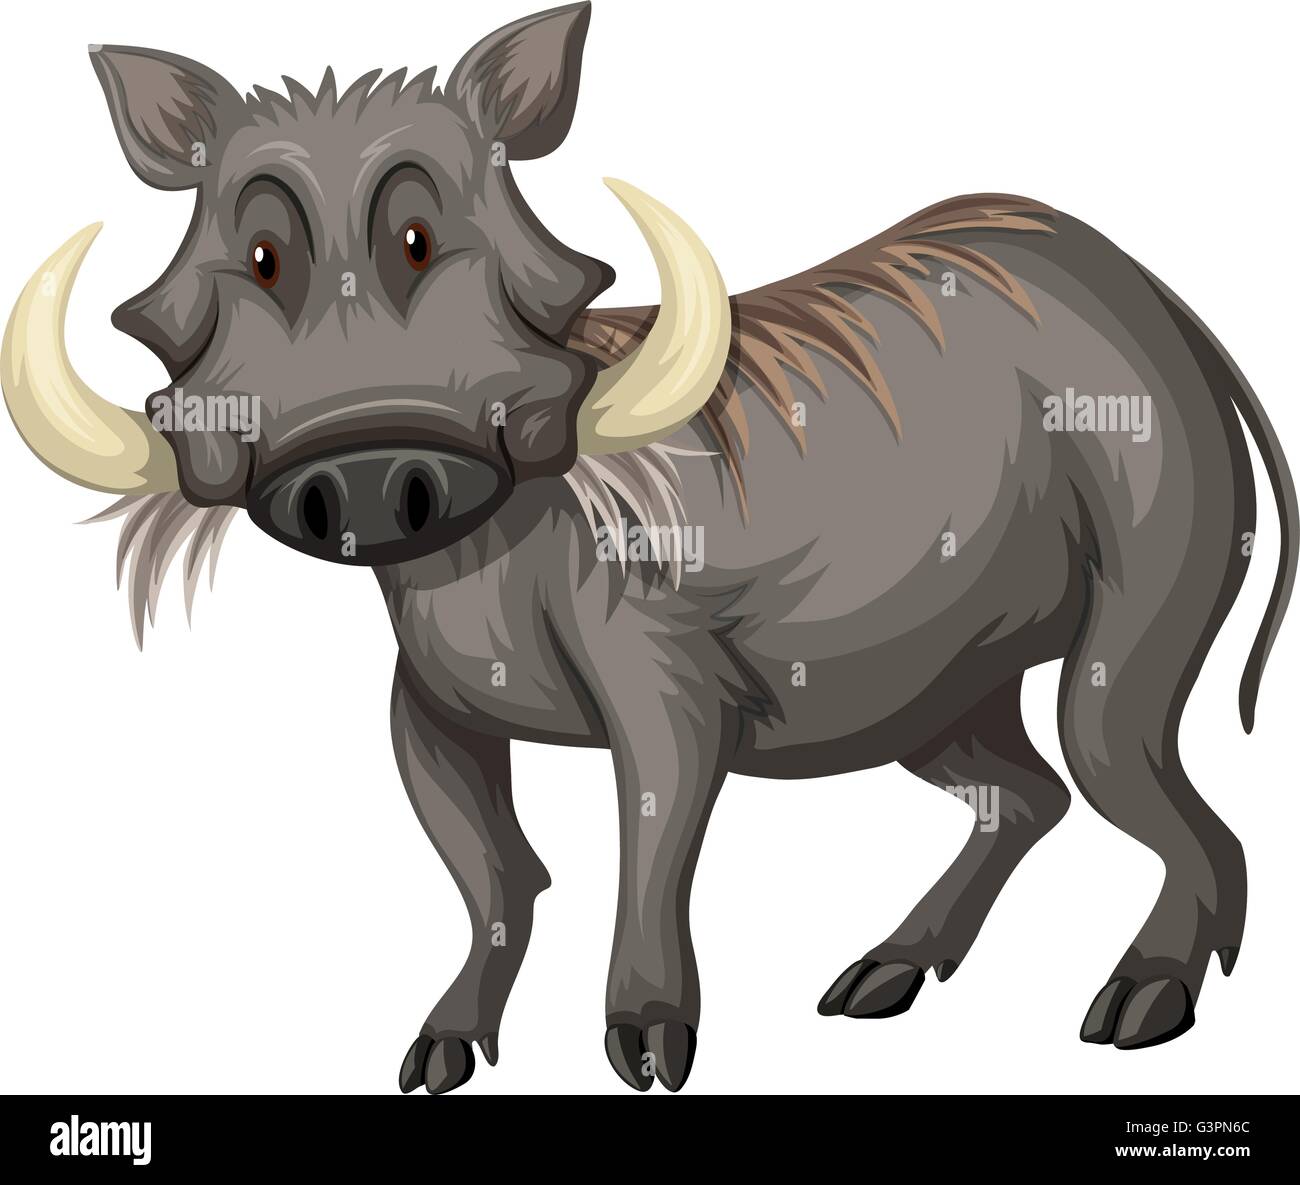 Wild pig with sharp teeth illustration Stock Vector